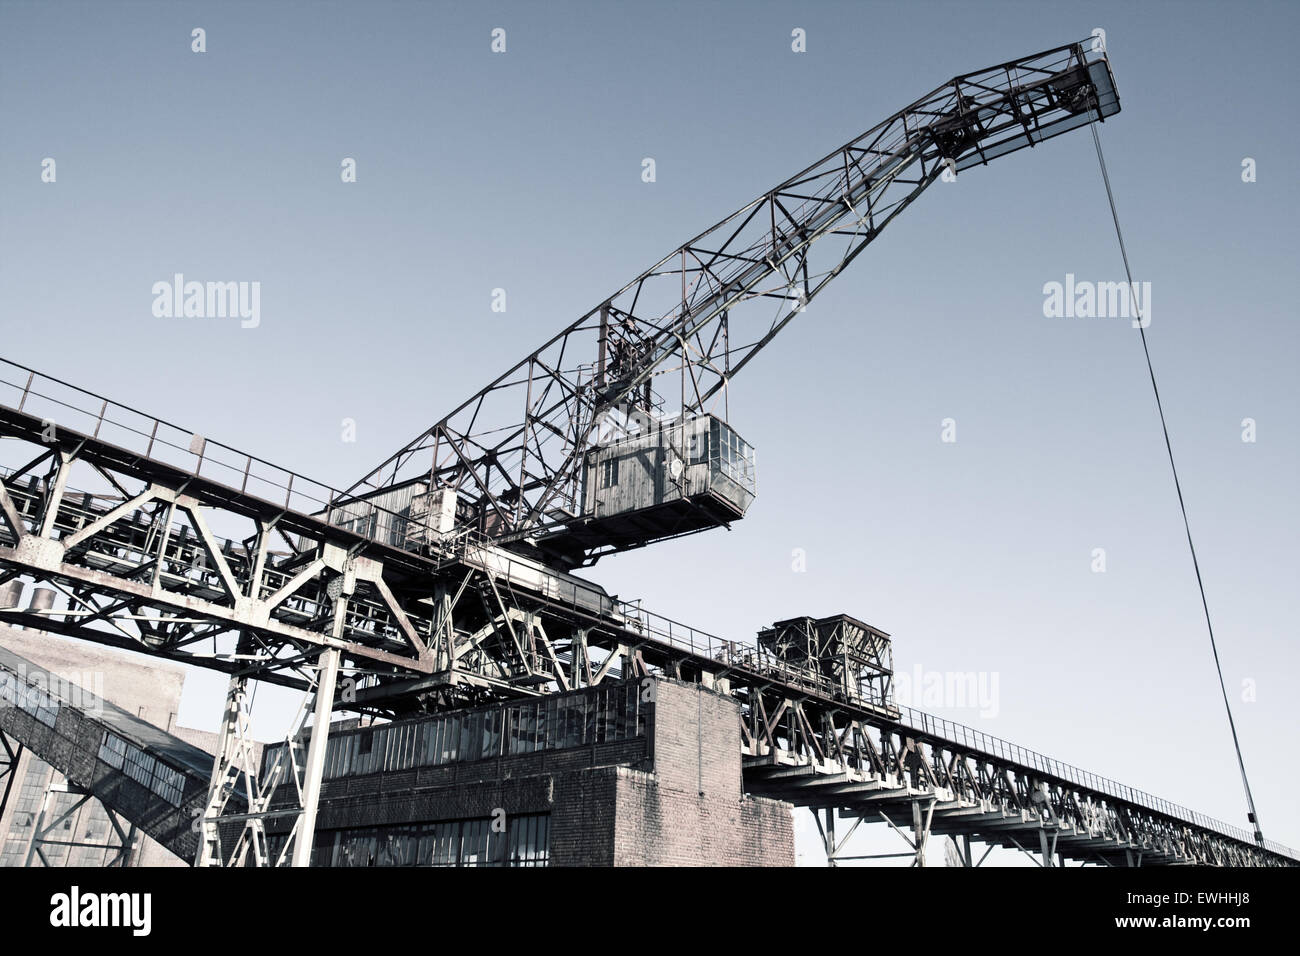 Old abandoned factory crane Stock Photo